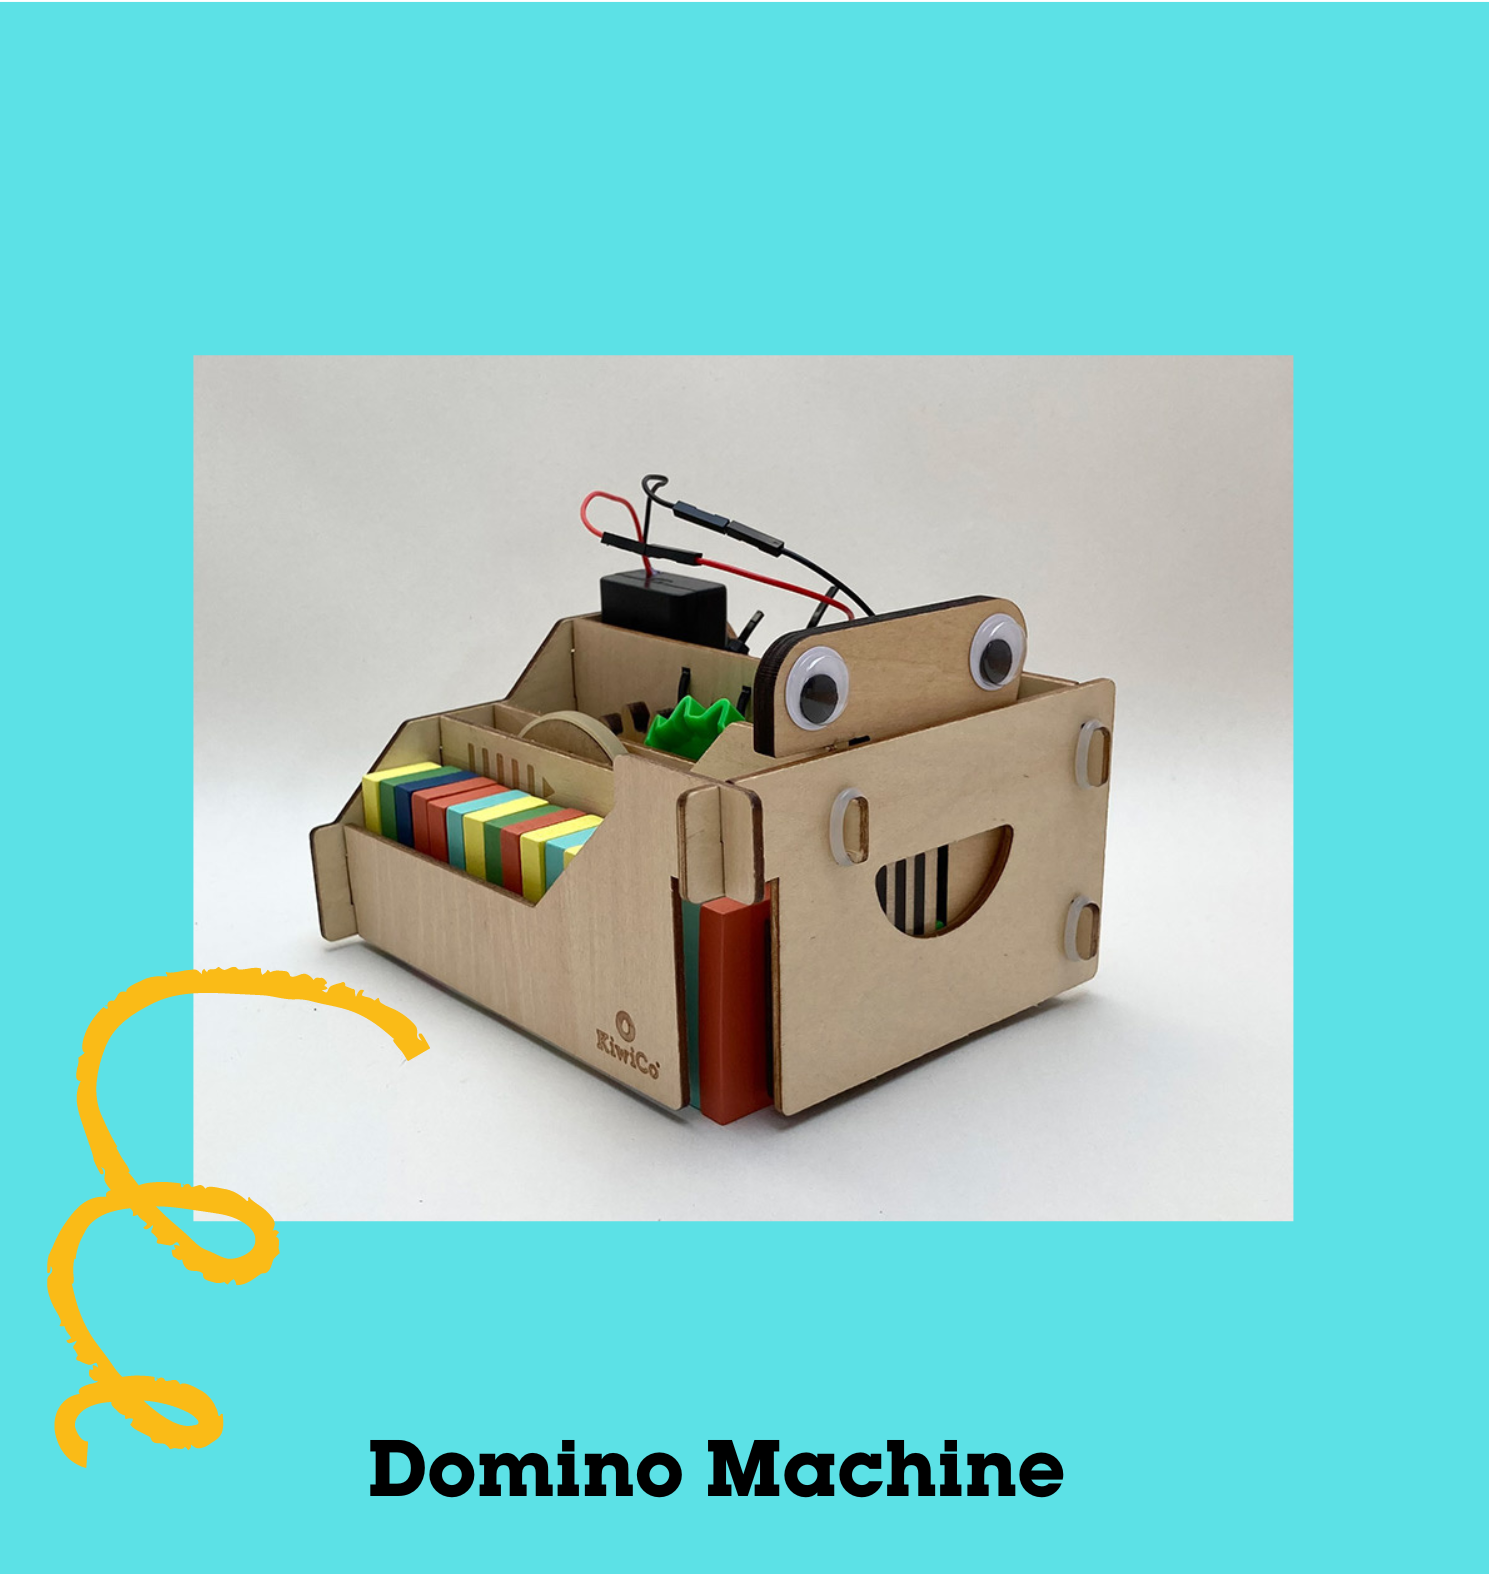 STEM Club - domino machine